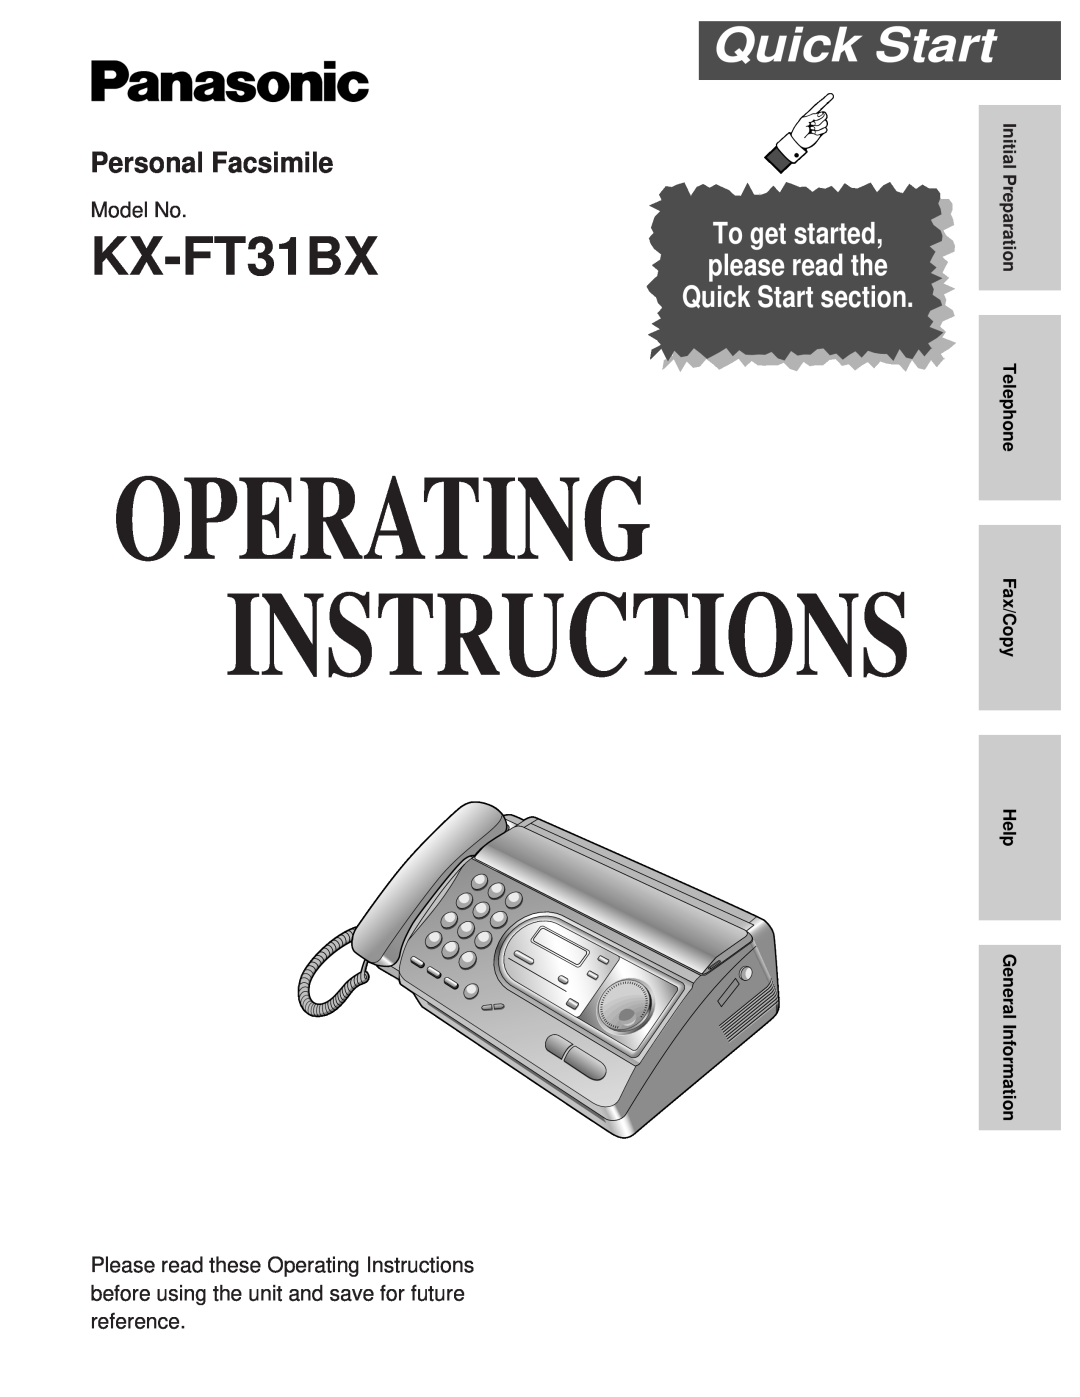 Panasonic KX-FT31BX quick start Quick Start, Personal Facsimile, Model No, Operating Instructions 